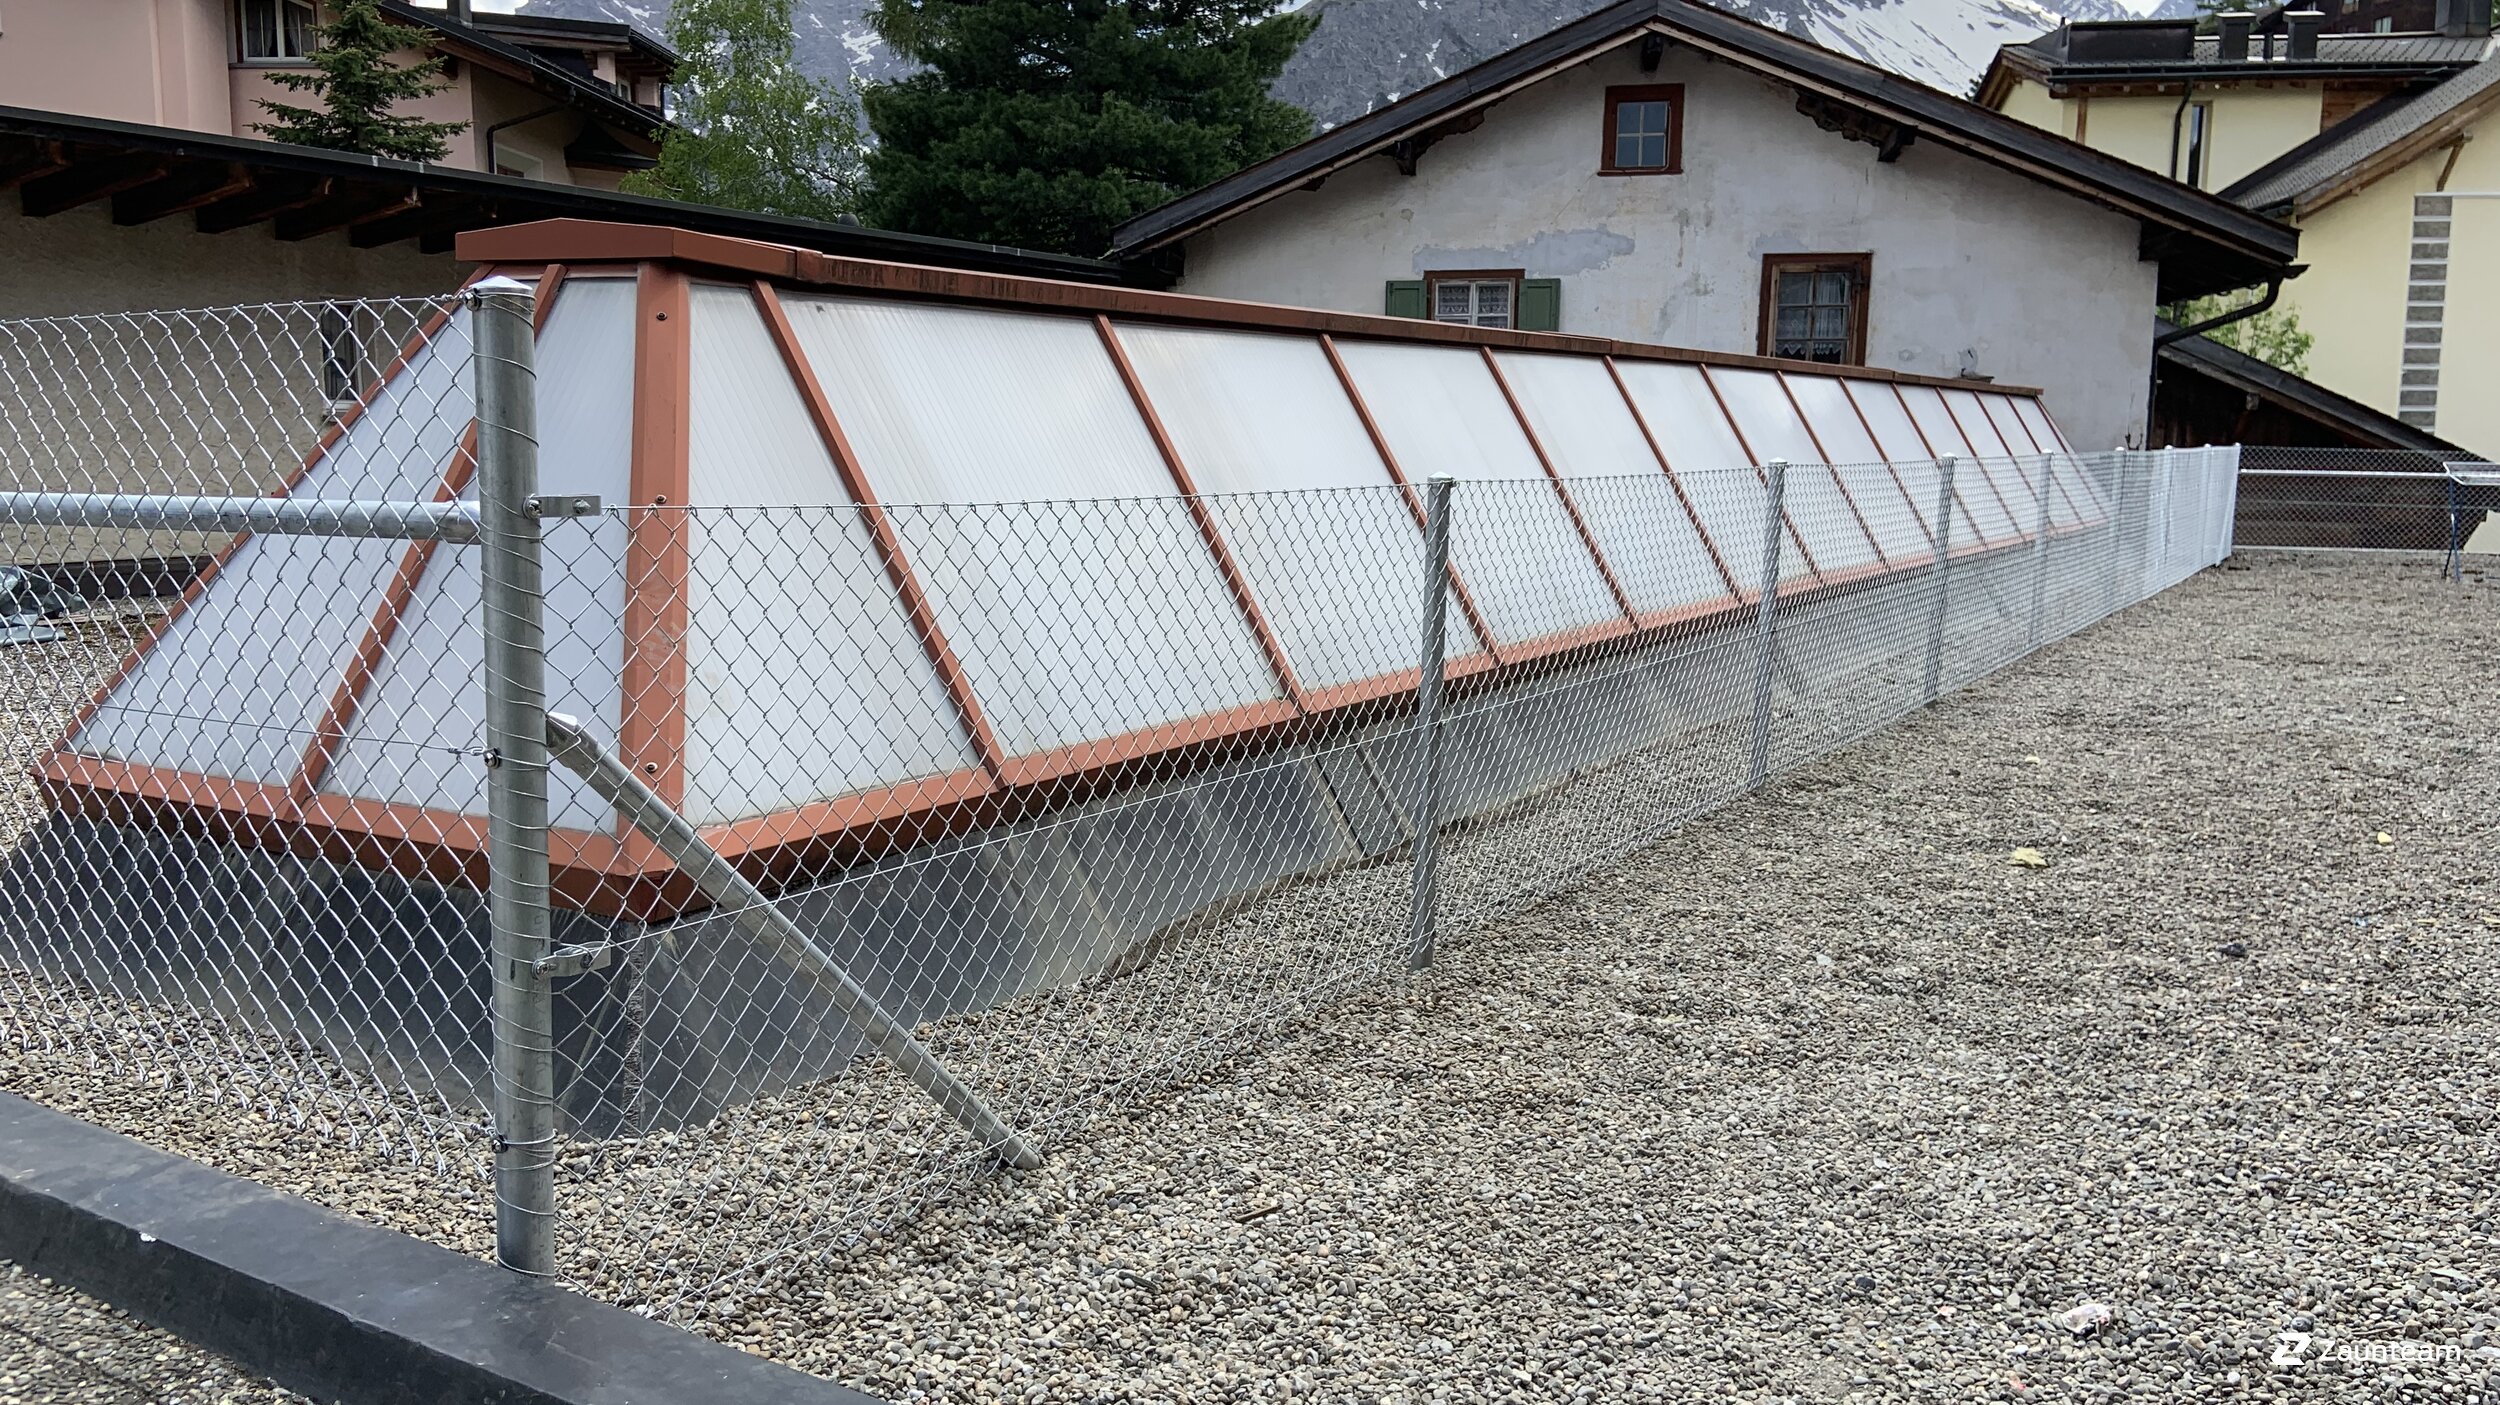 Grillage diagonal de 2019 à 7050 Arosa Suisse de Zaunteam Heidiland.